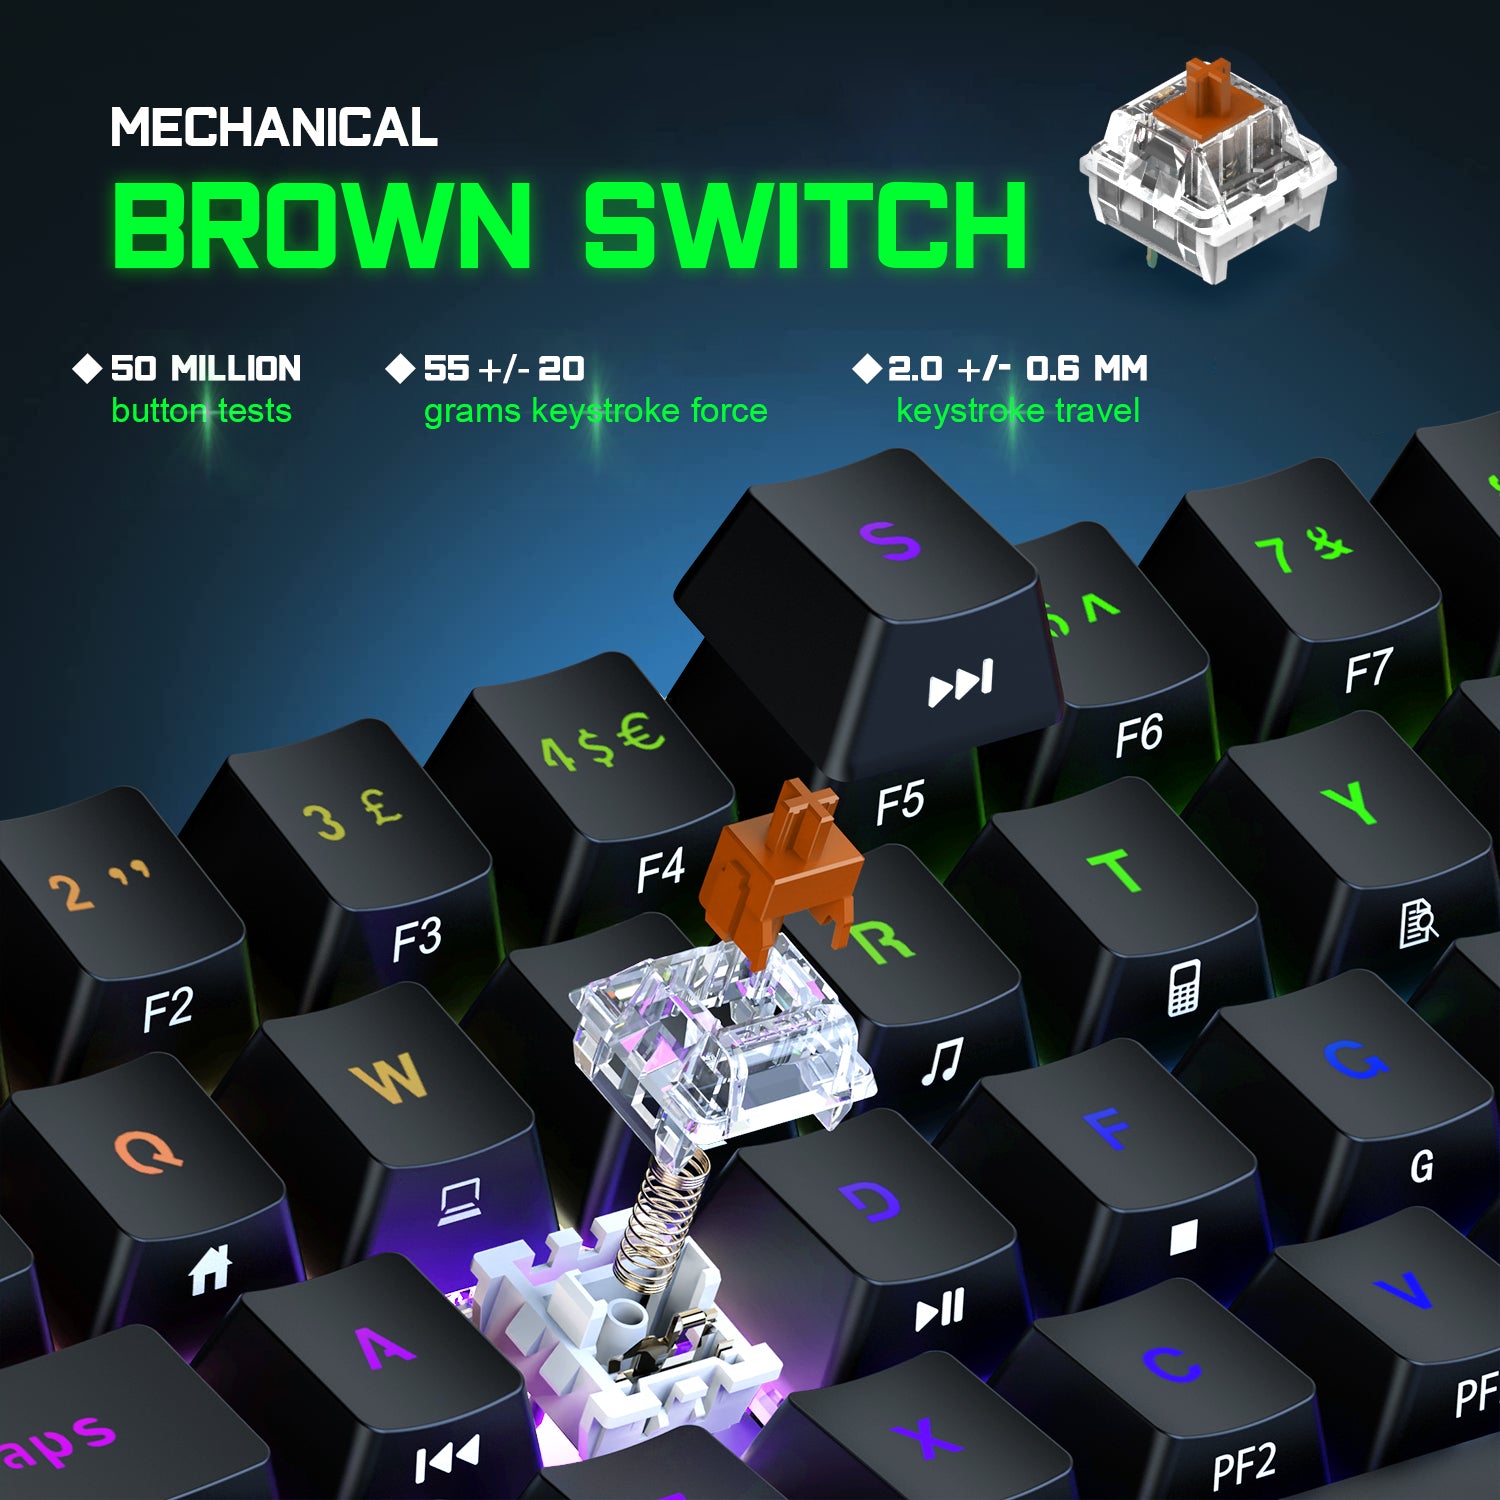 MAGIC-REFINER MK22 Compact 60% Mechanical Gaming Keyboard with all key Anti-ghosting , 61 Key Rainbow RGB Backlit Metal Plate Type-C